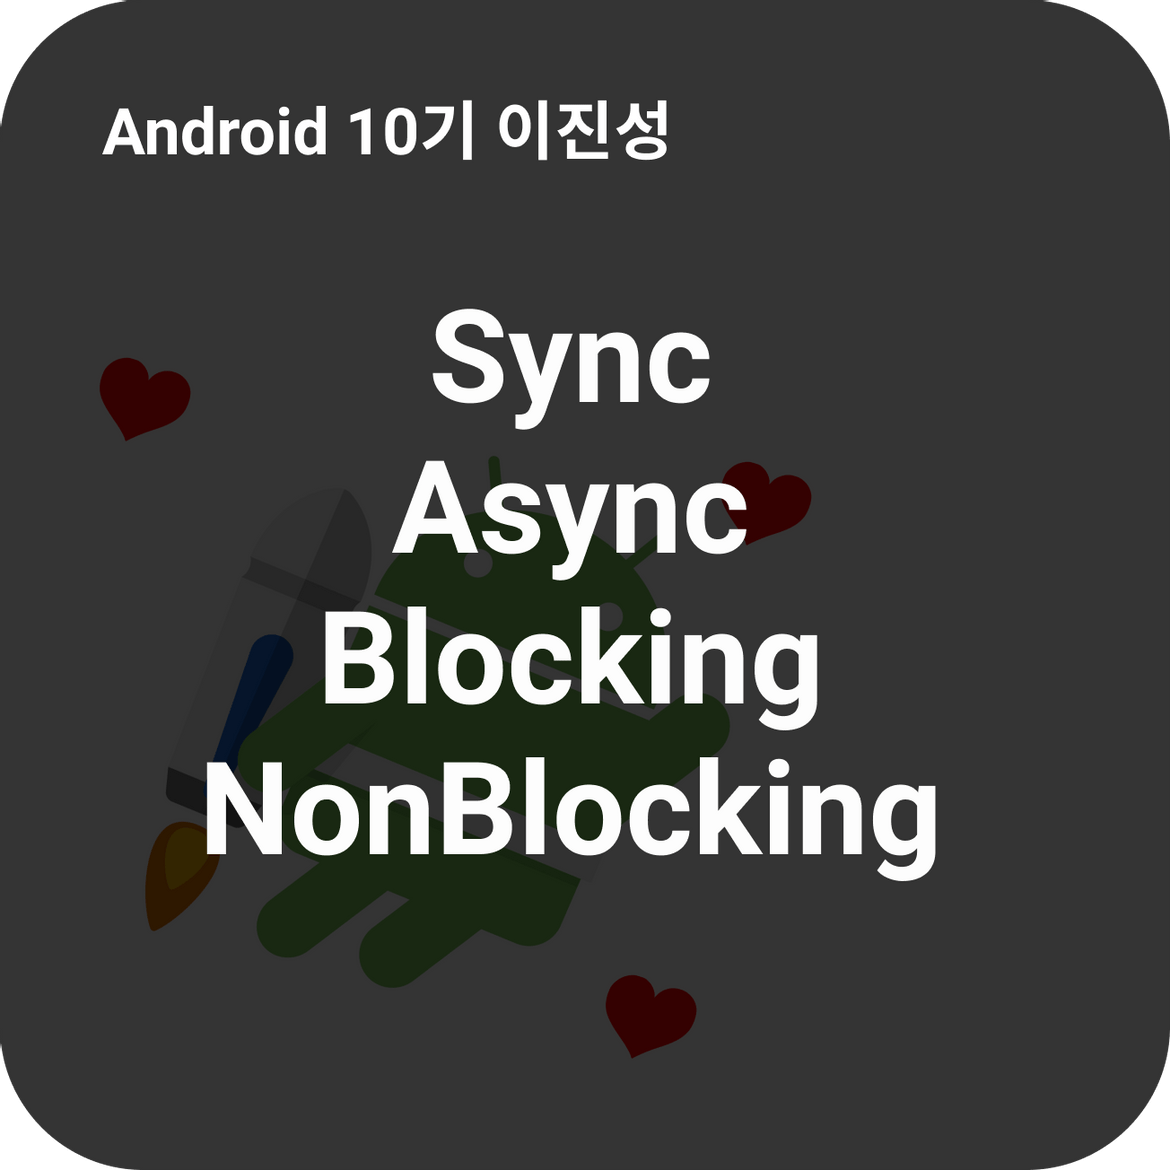 Sync, Async, Blocking, NonBlocking